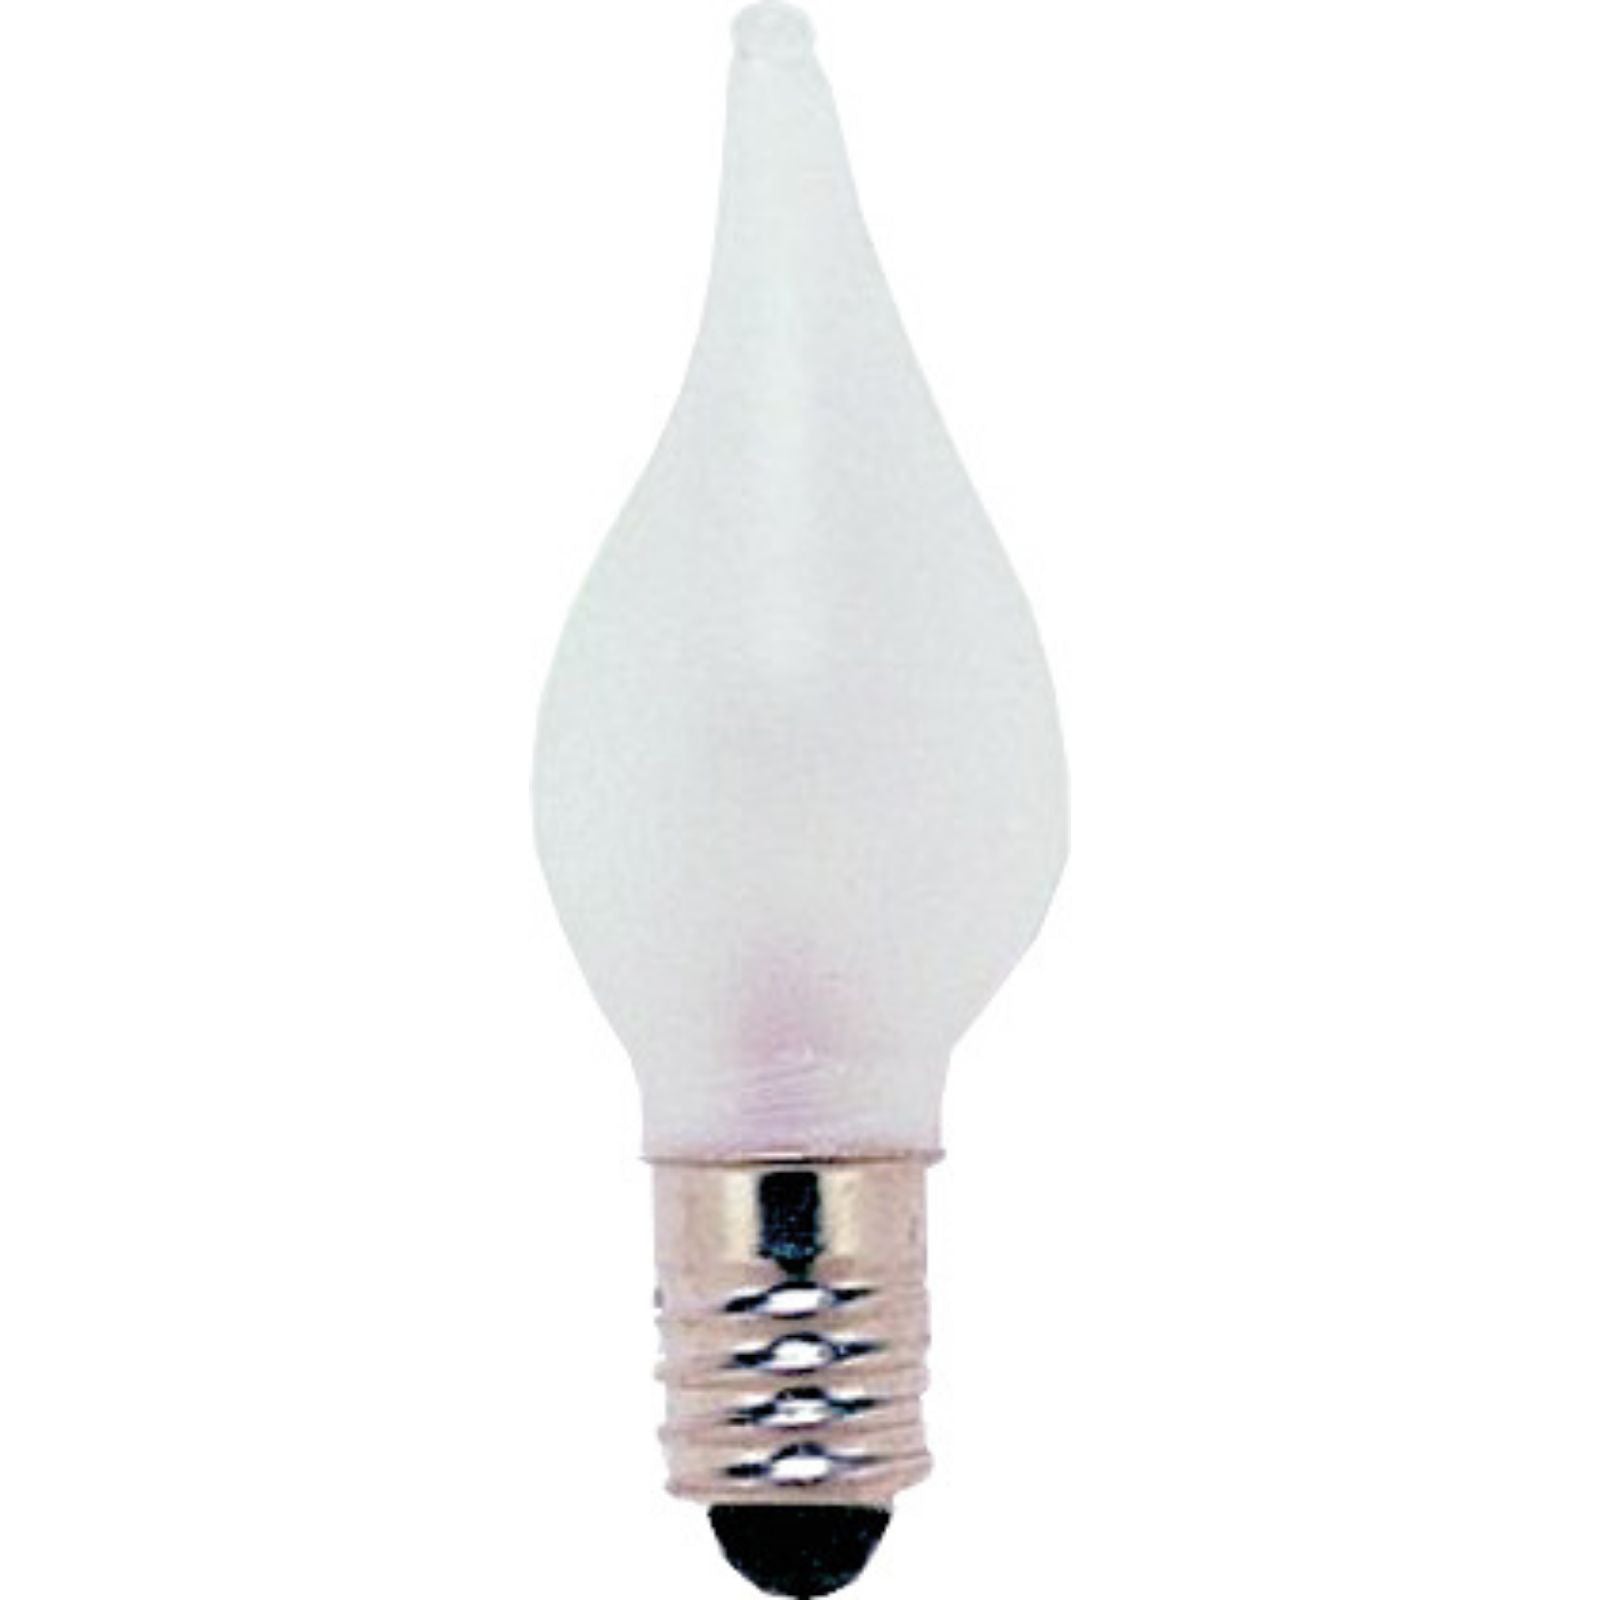 reservlampa-3-pack-spare-bulb-310-58